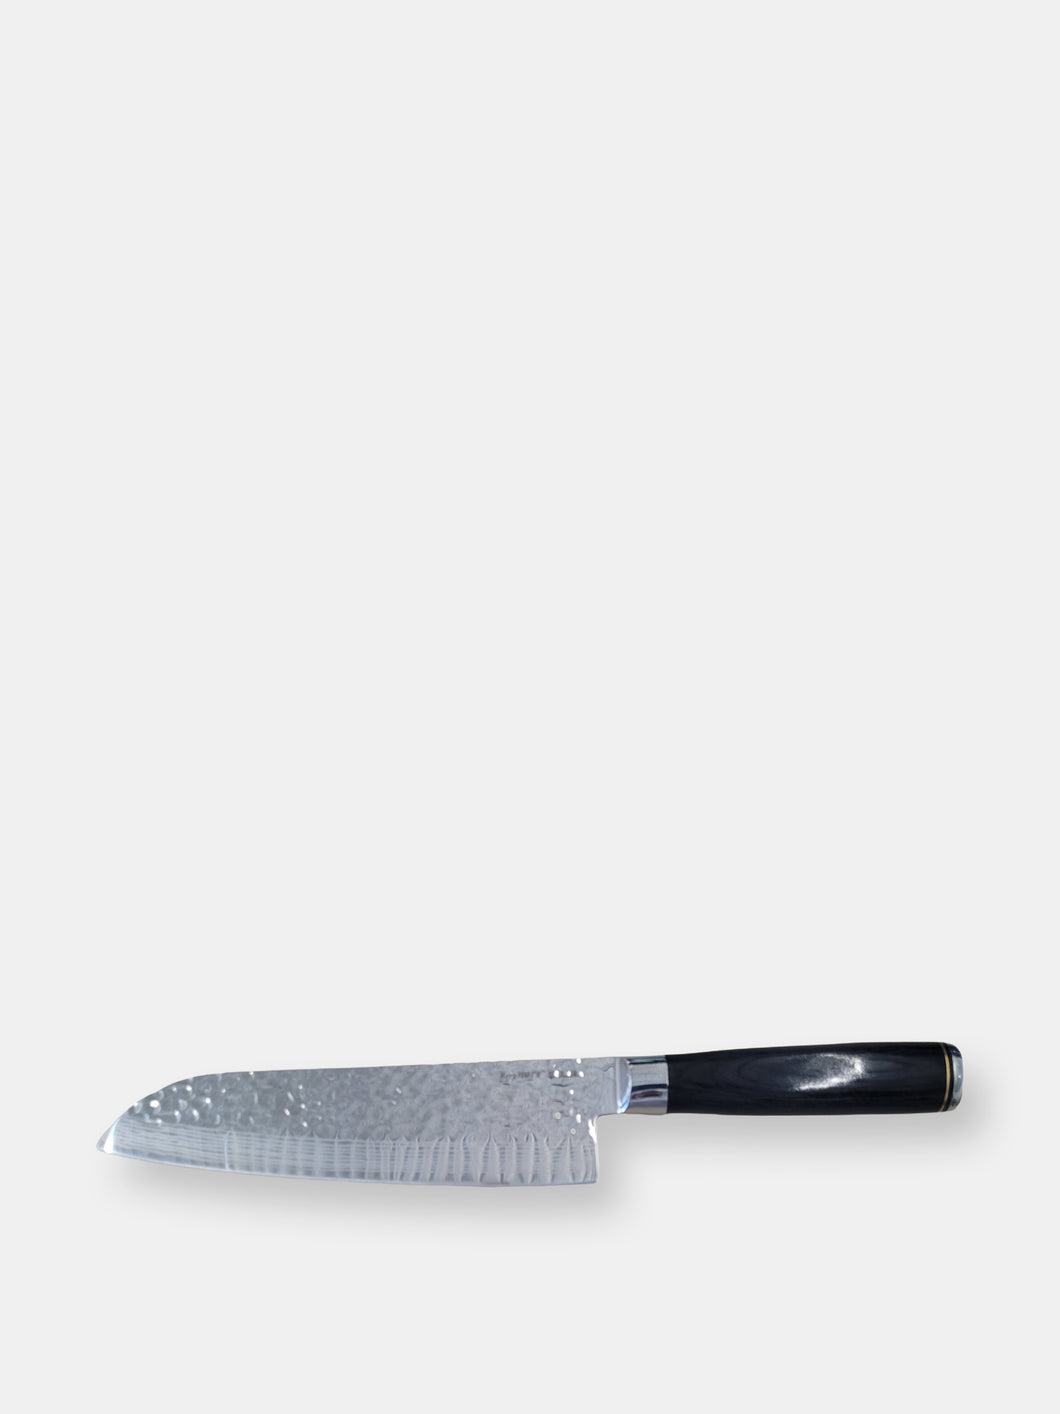 BergHOFF Martello 7.5'' Chef knife